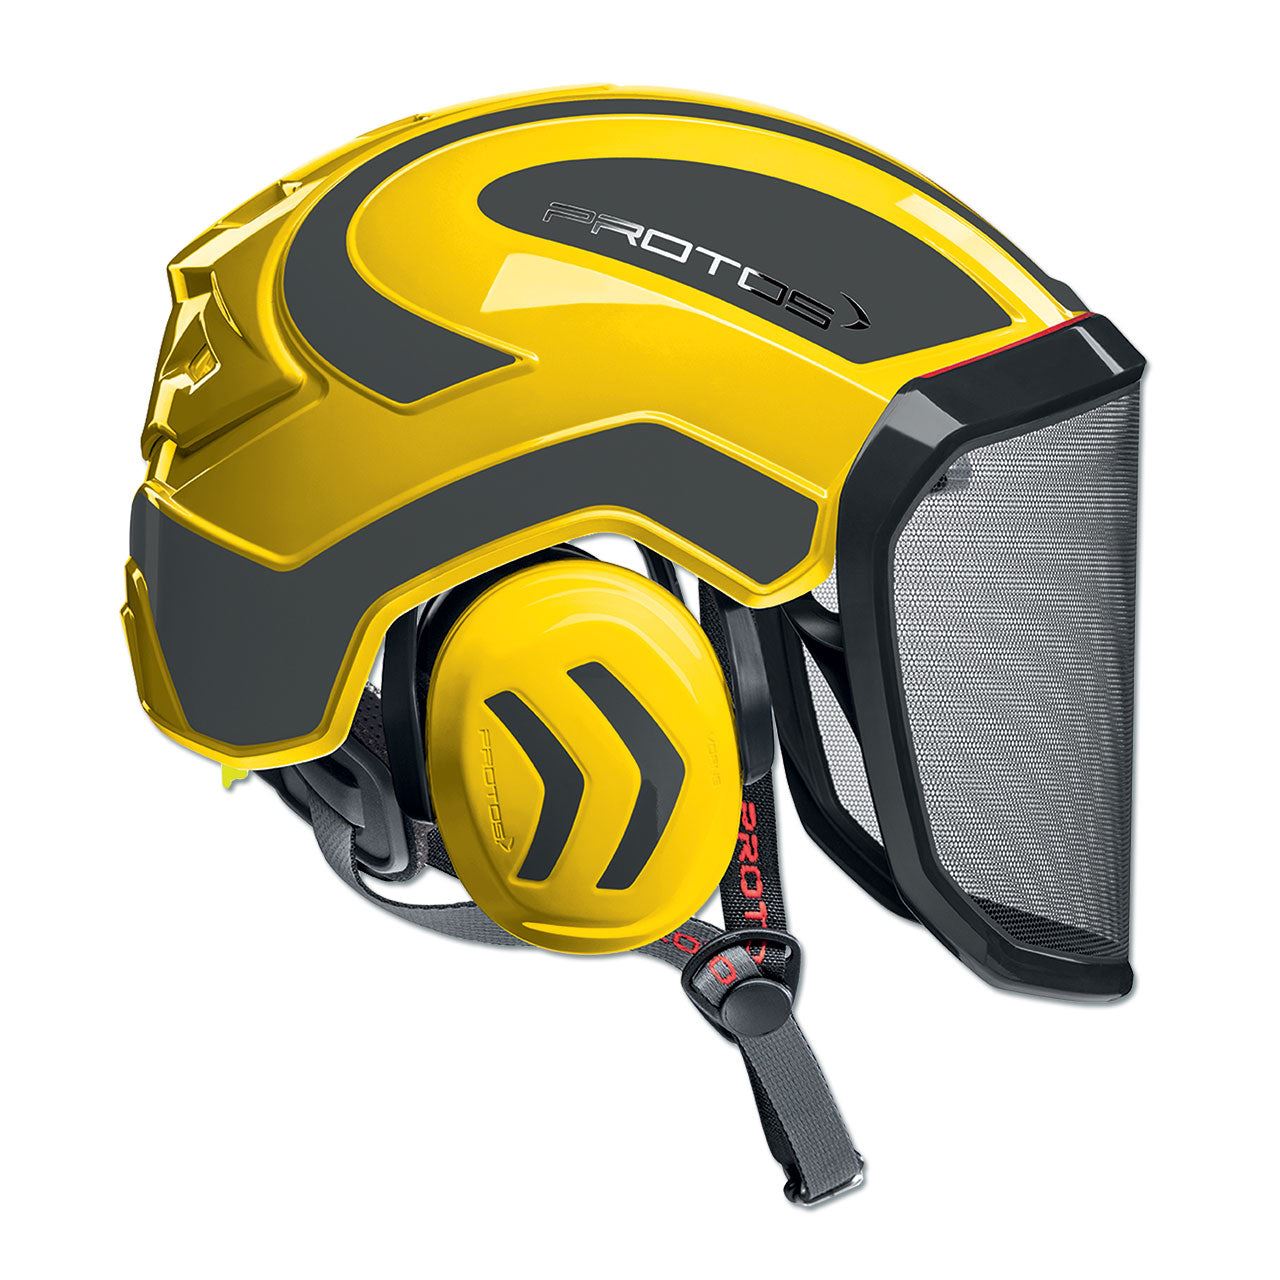 Pfanner PROTOS-YG Protos Helmet, Yellow/Gray